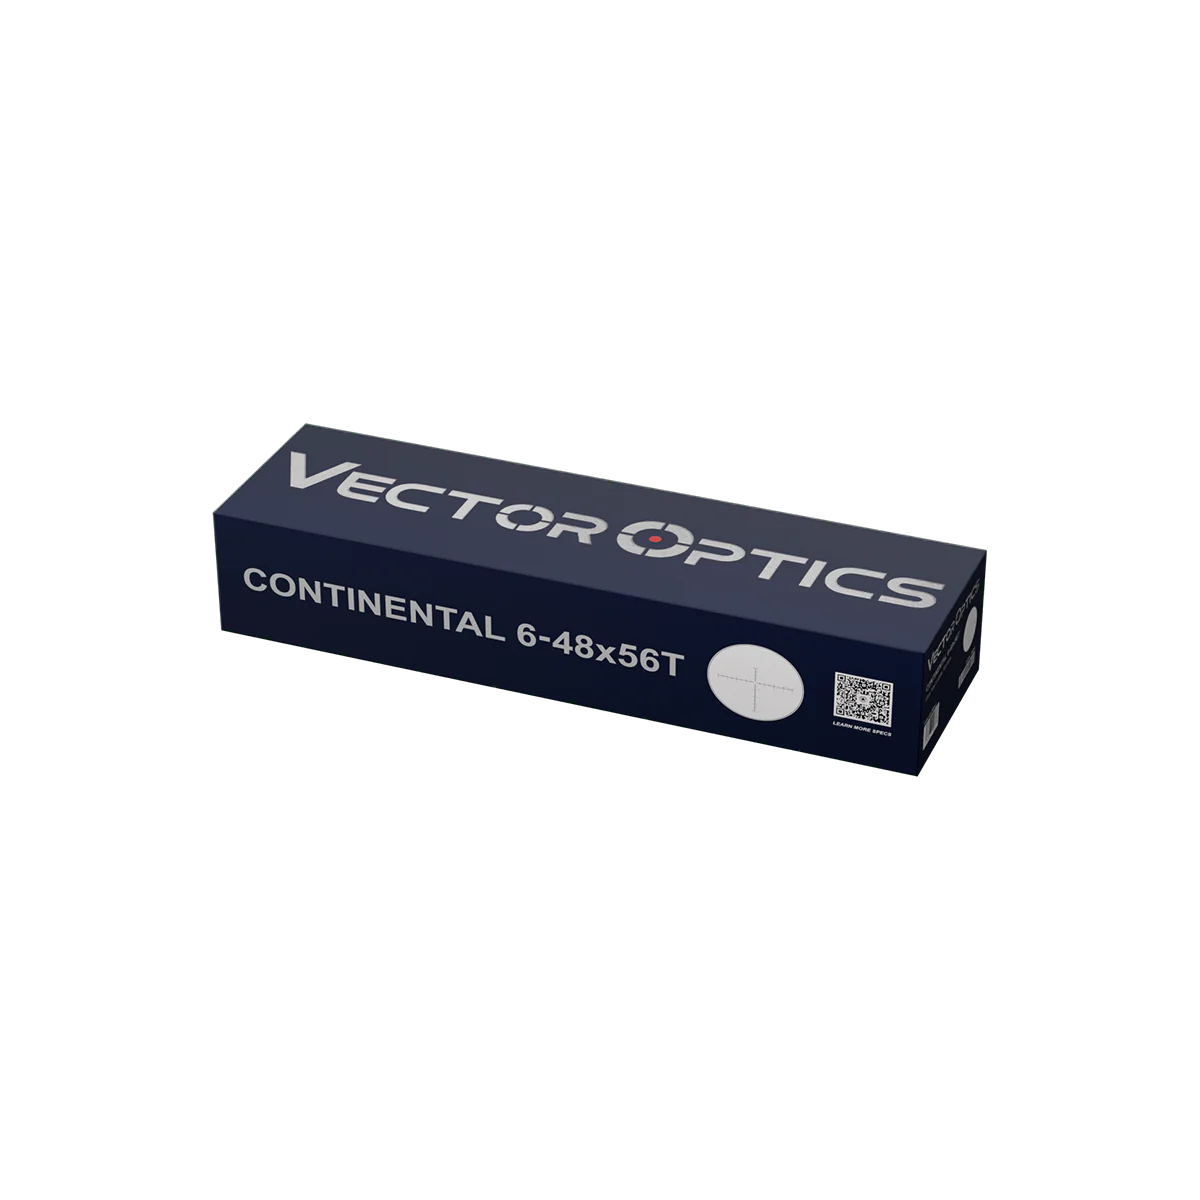 CONTINENTAL X8 6-48X56 ED MIL TACTICAL RIFLESCOPE SCOL-TM52